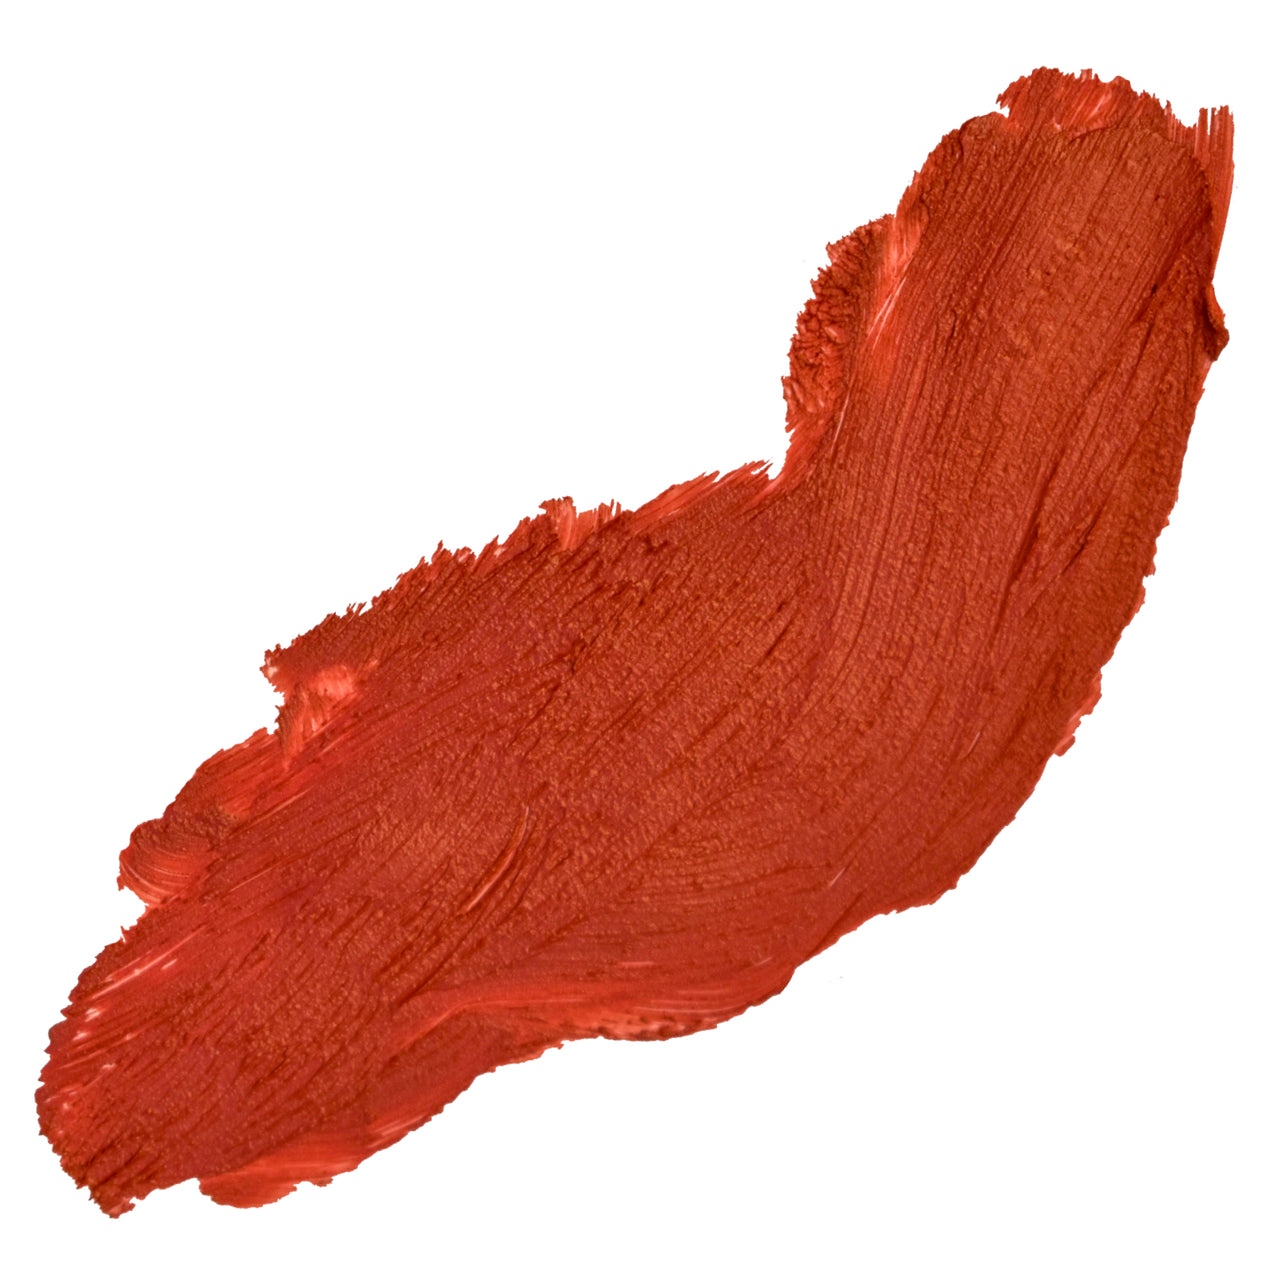 Flourish - Shimmery Orange Brown Deep Coral Long Lasting Organic Lipstick swatch white background